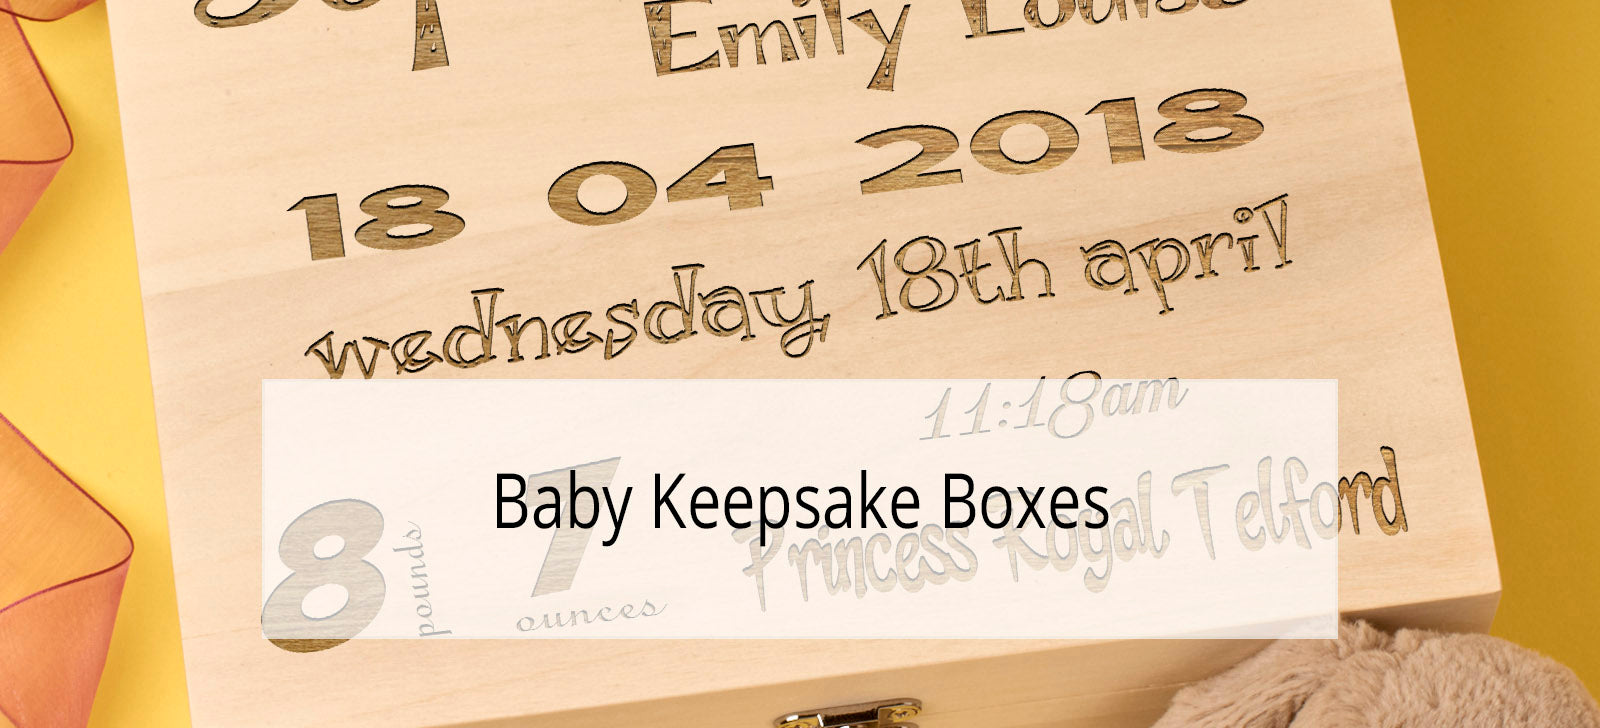 Baby Keepsake Boxes